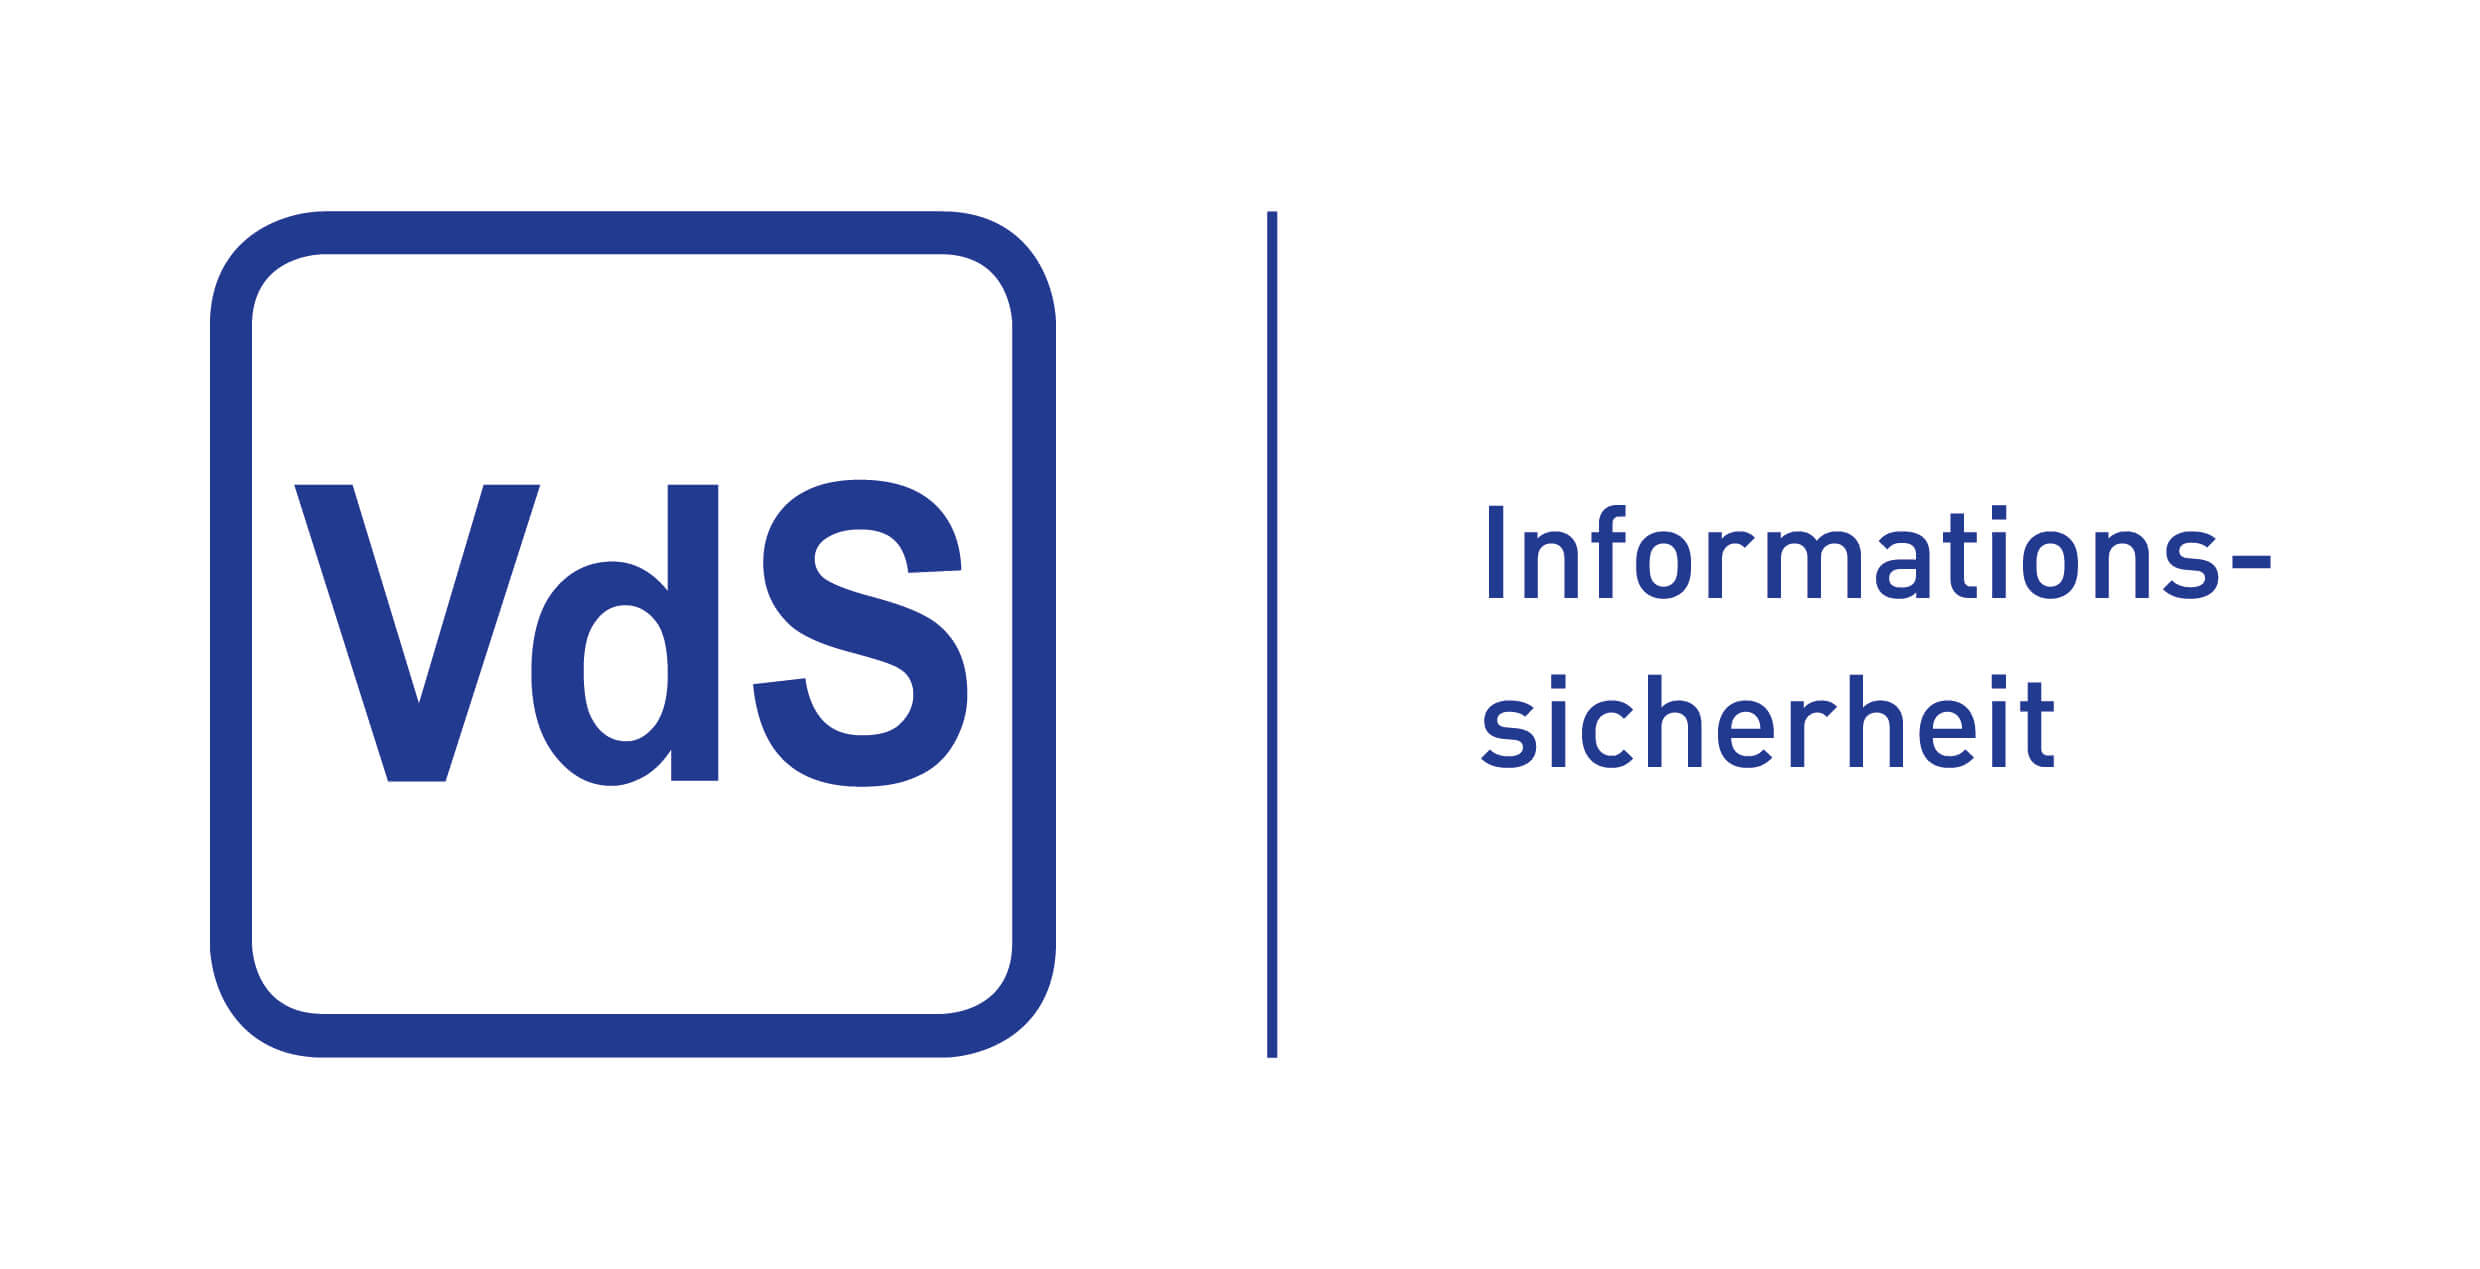 VDS information-security seal